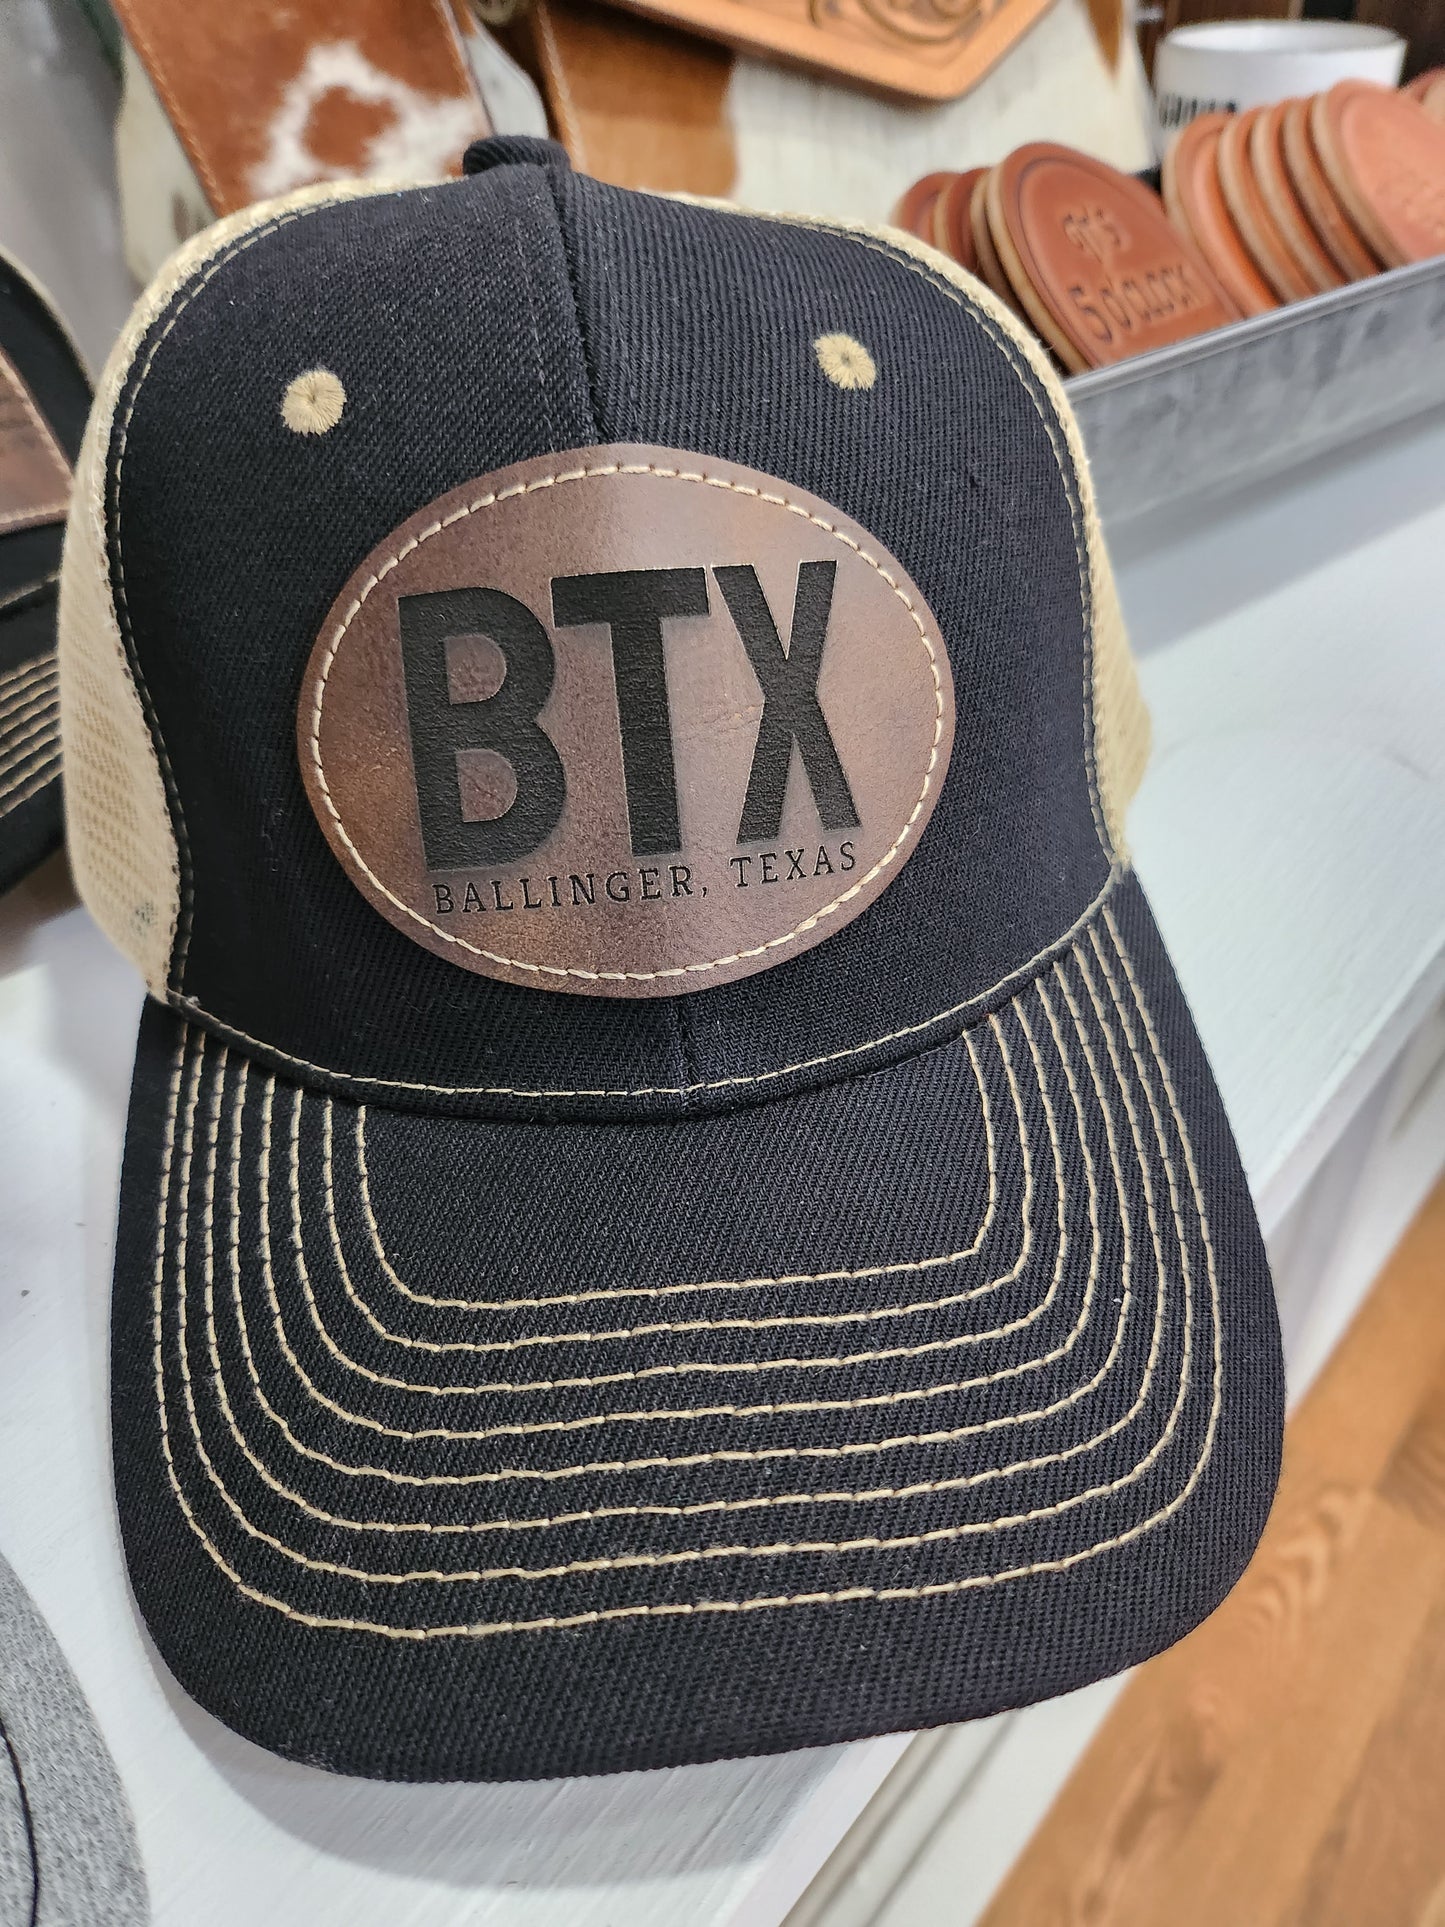 BTX Baseball Cap Oval Patch